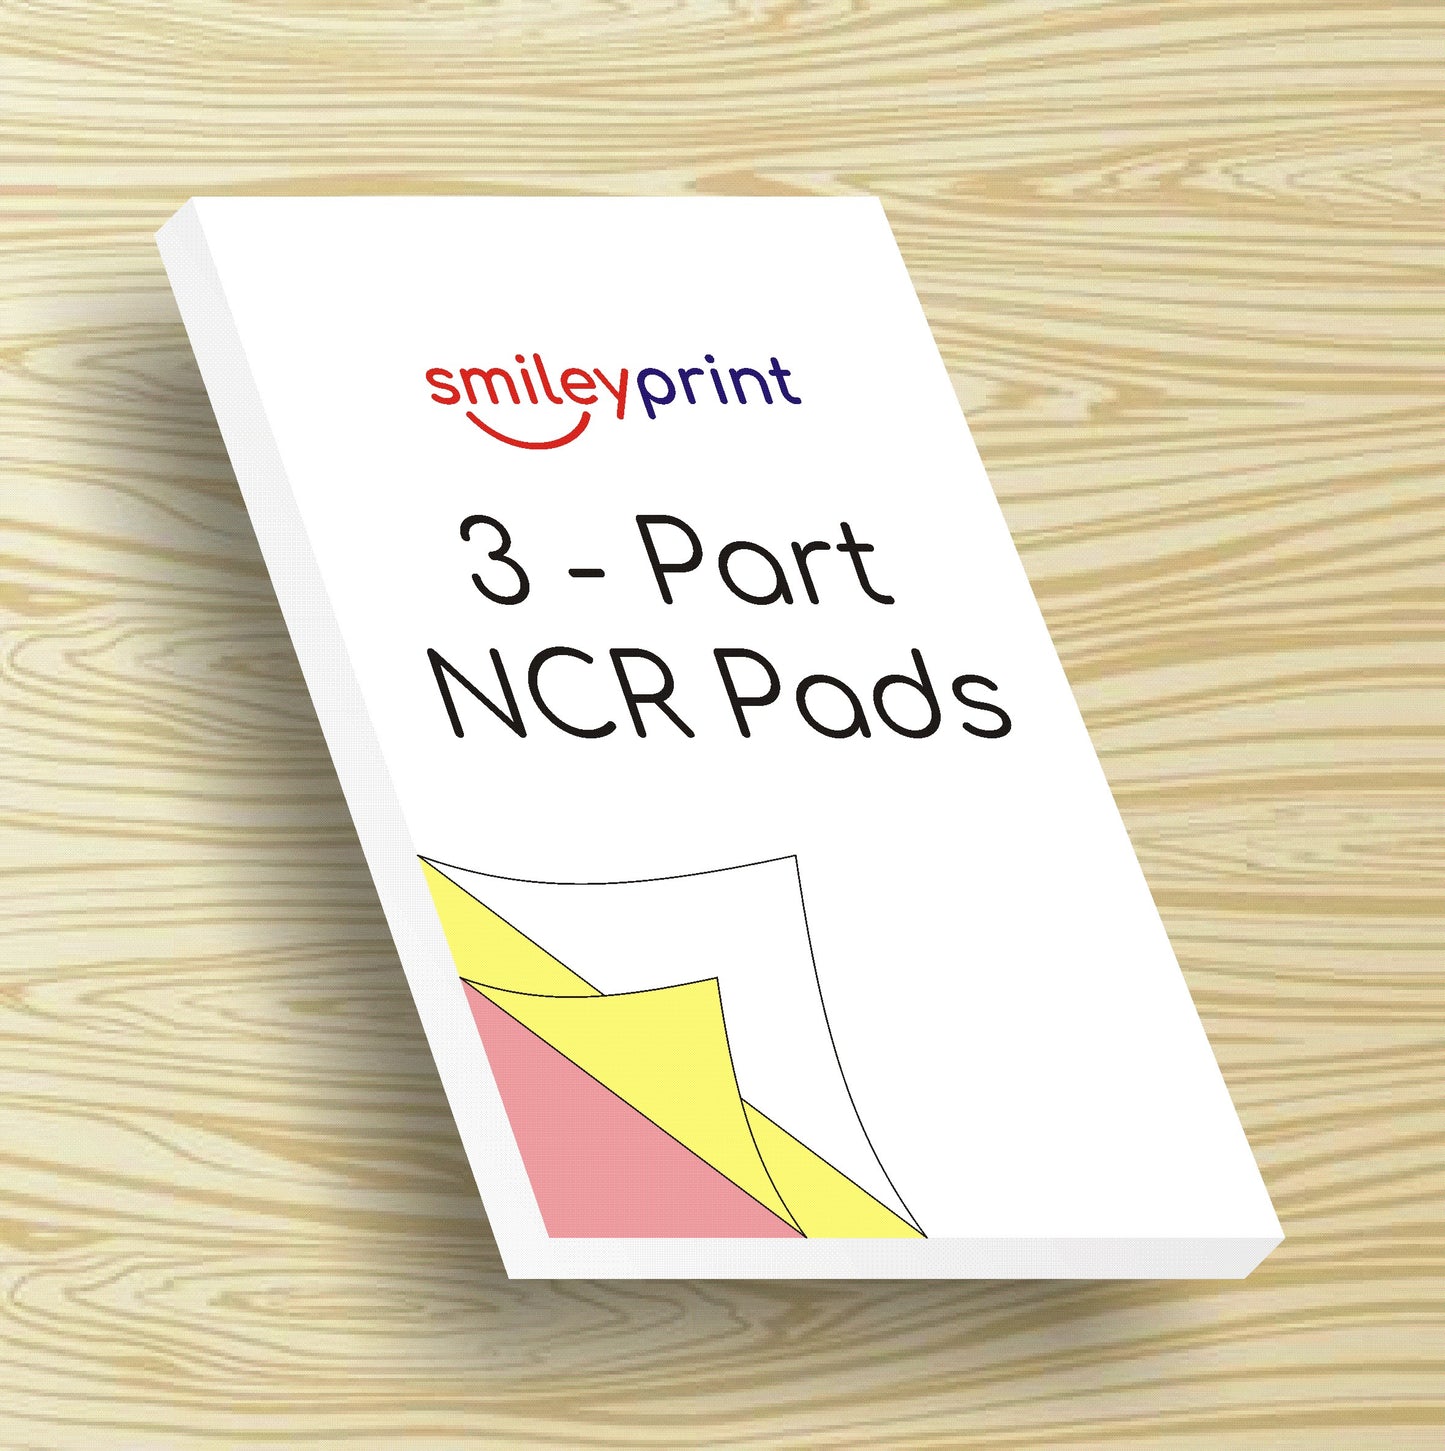 Triplicate NCR Pads | Smileyprint.co.uk